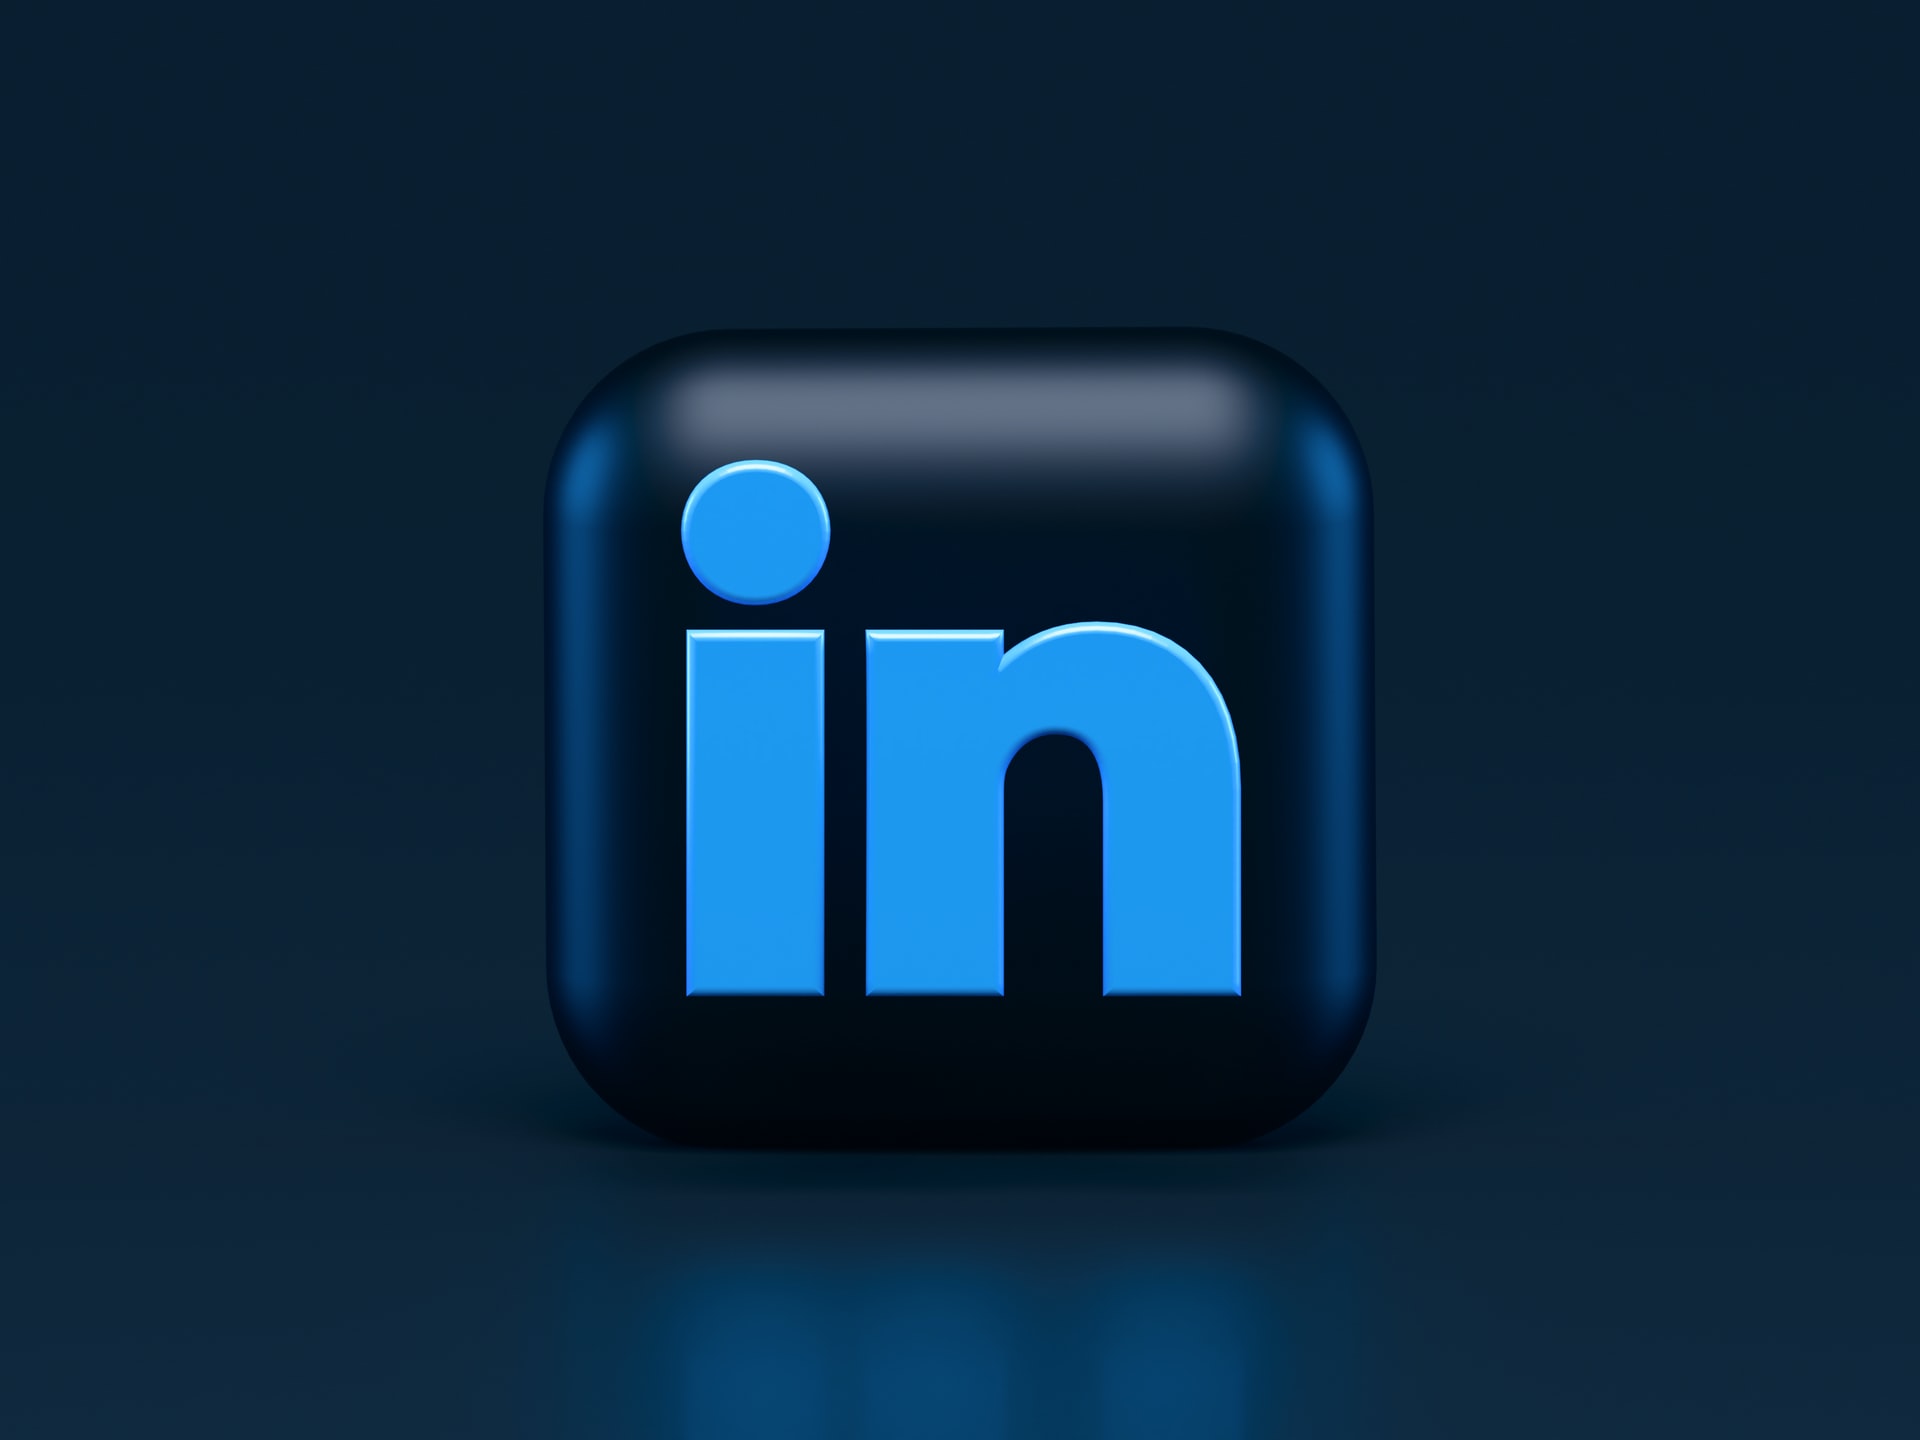 LinkedIn logo with blue background